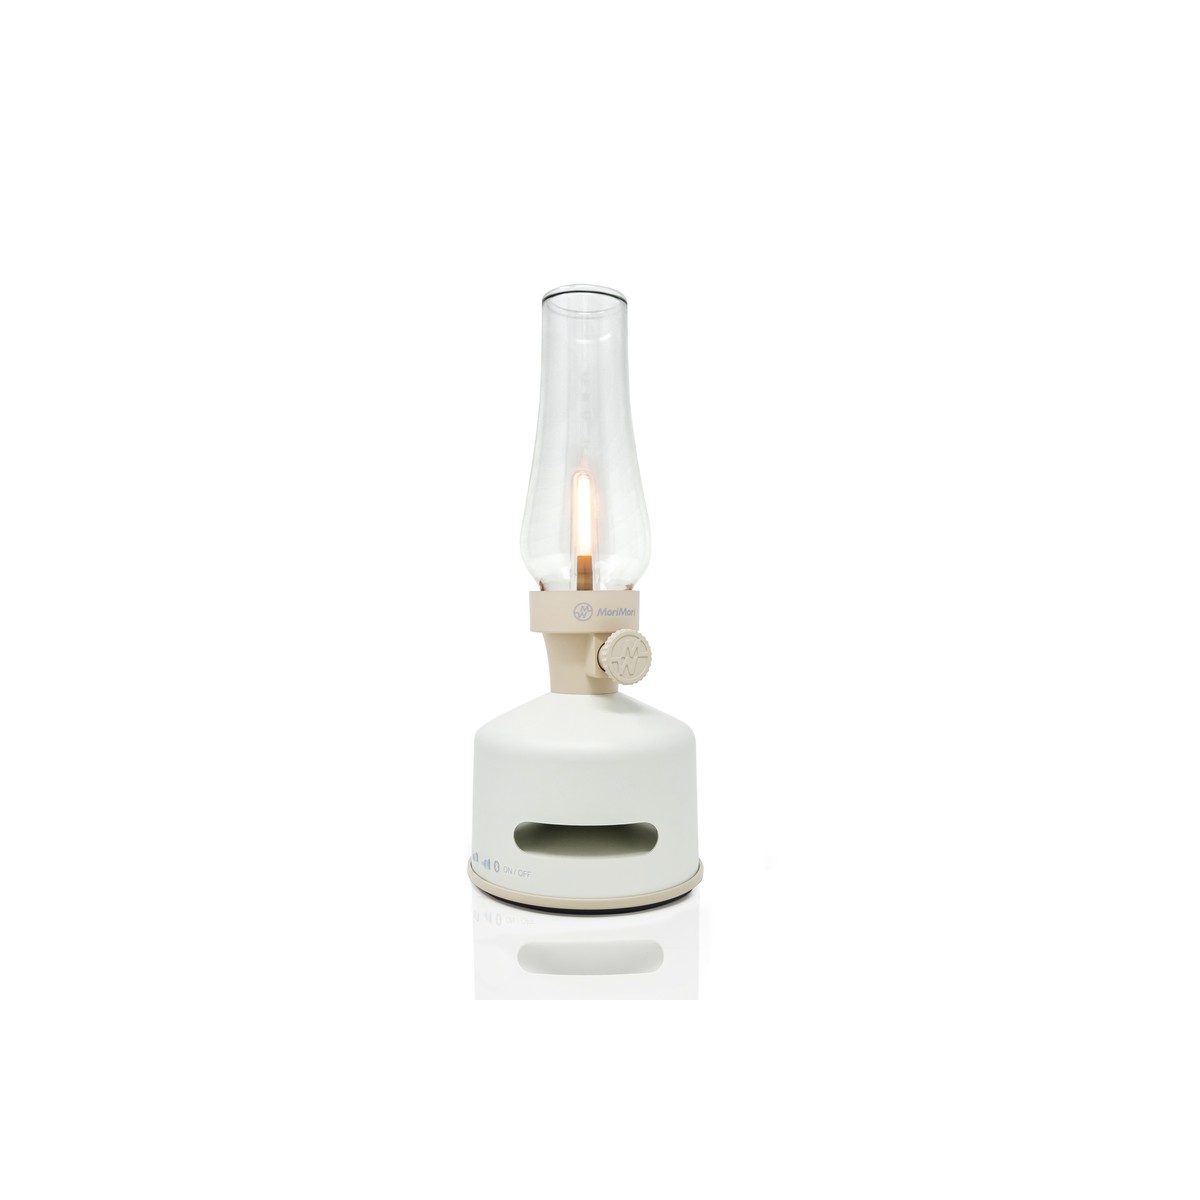   Lanterne Led Speaker Blanche Audio Bluetooth- Beach House(off-white ) Blanc albâtre 11x11x27cm 5w